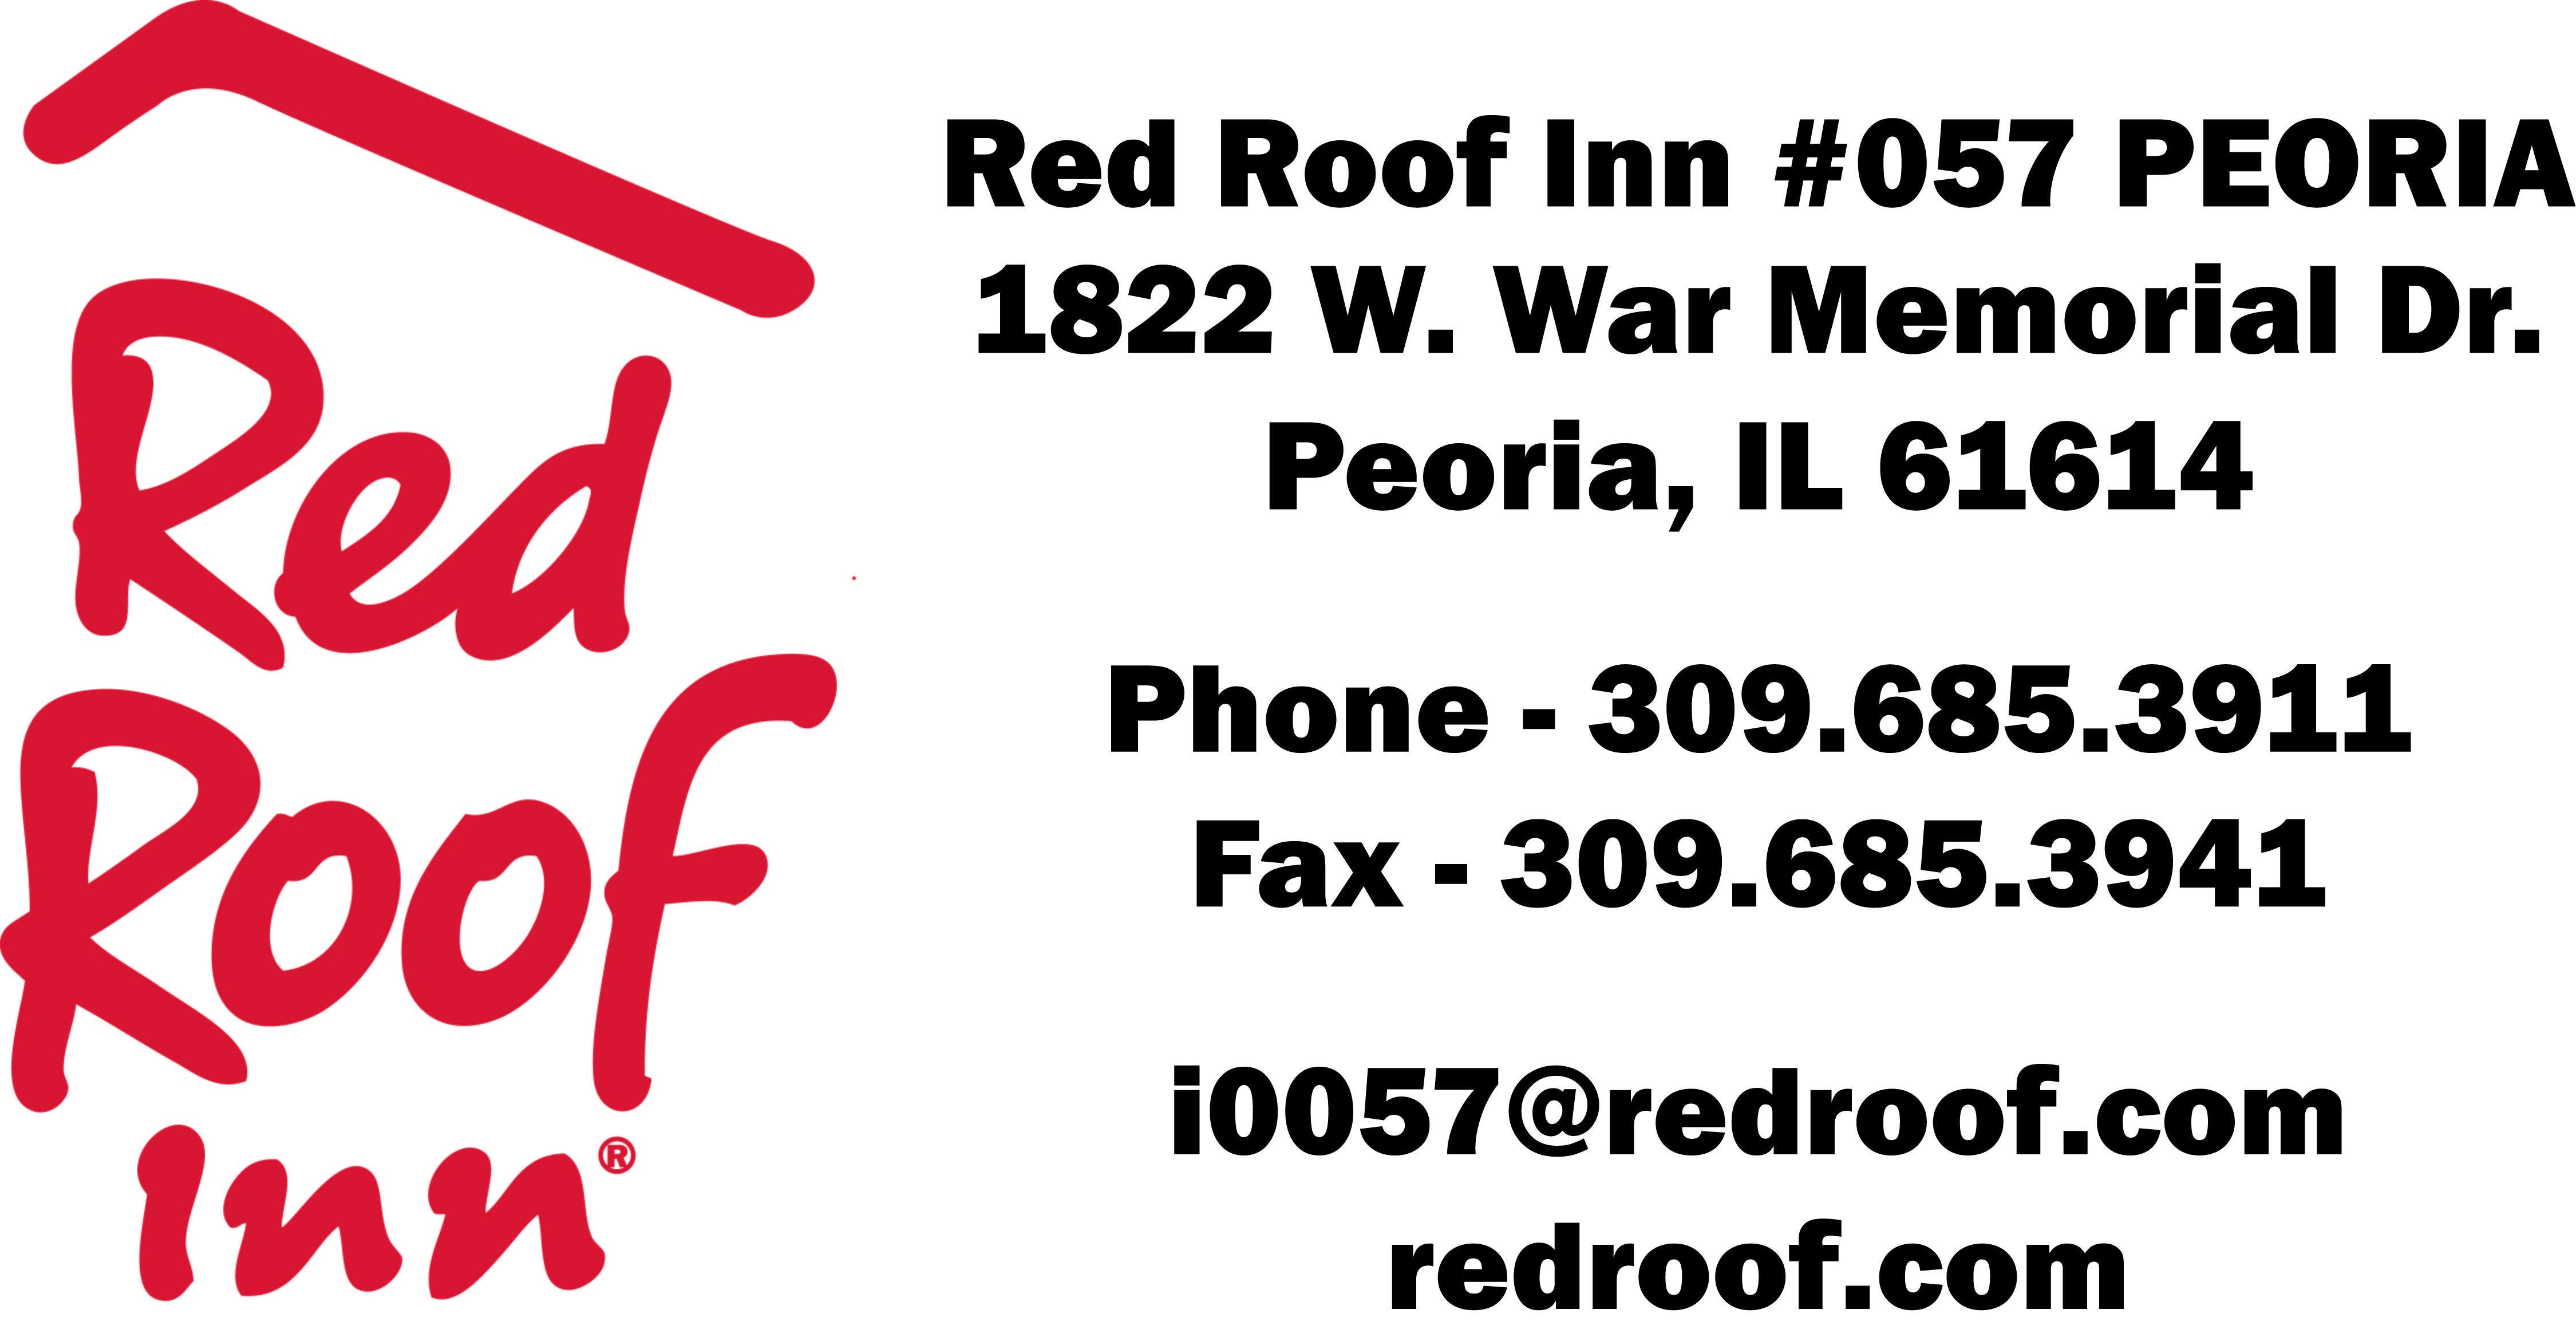 Red Roof Inn Logo - Current Partners - Avantis Dome